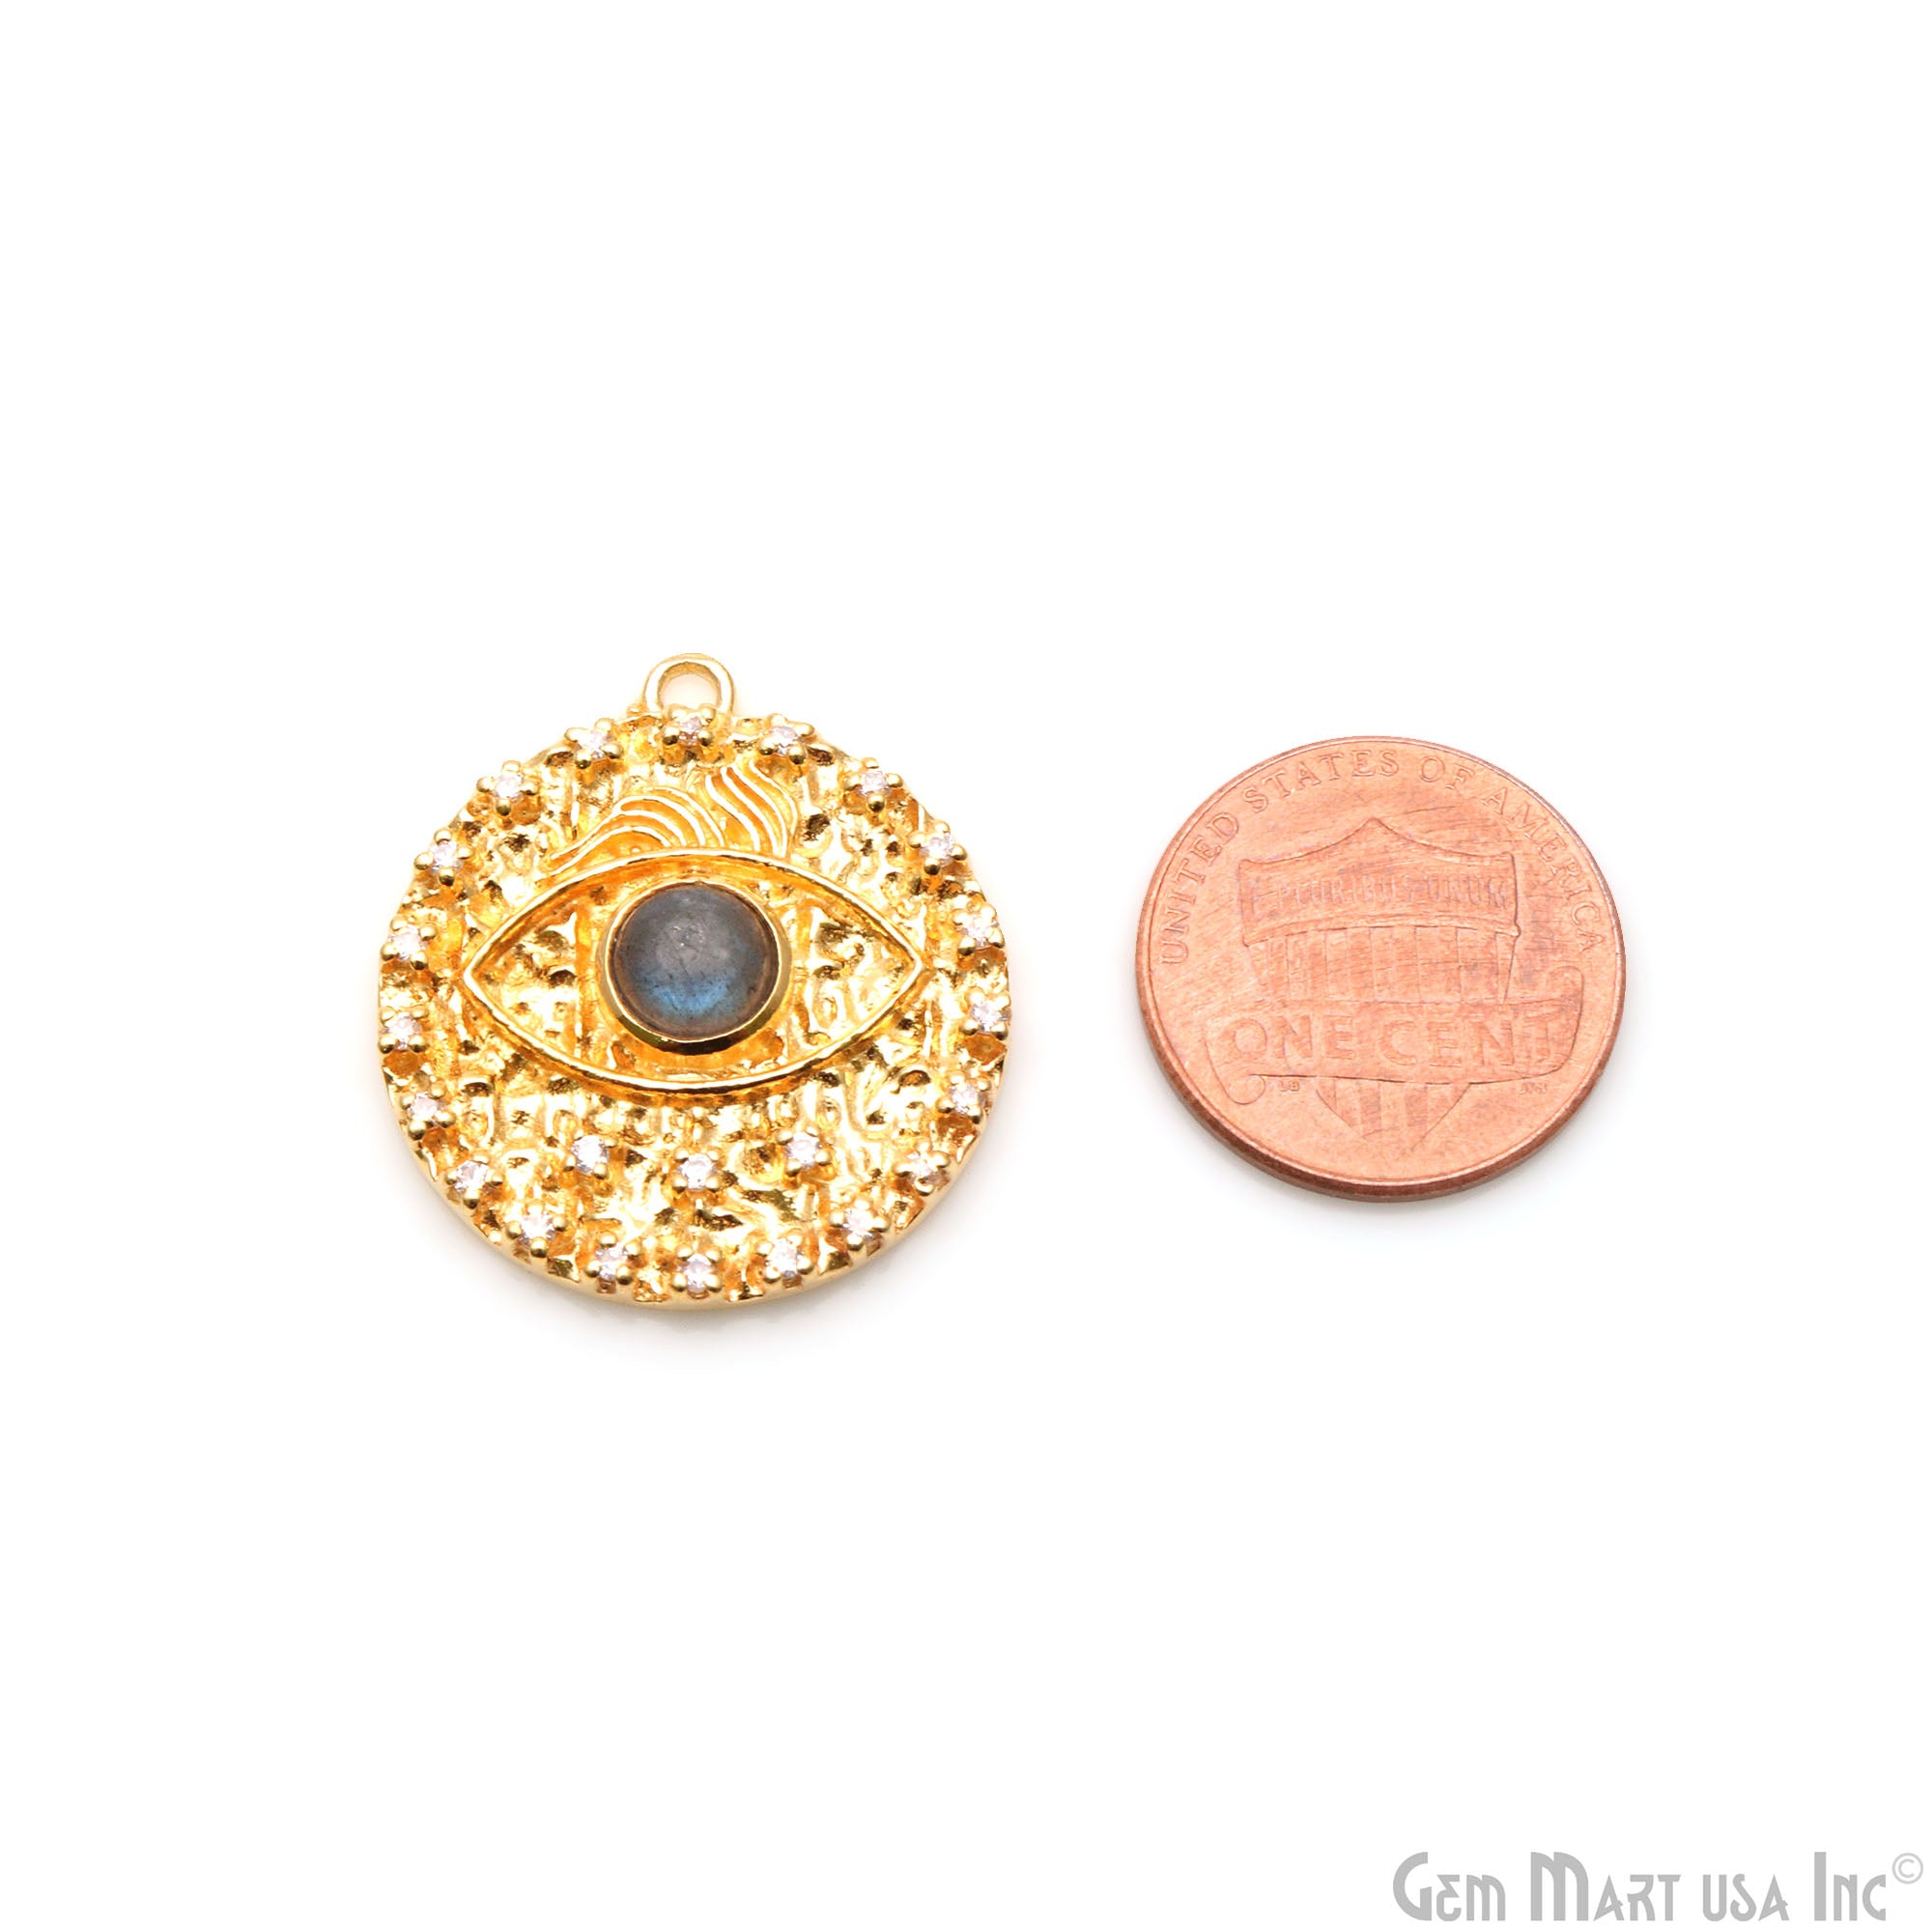 Round & Marquise Eye 27x24mm Gold Plated Single Bail Gemstone Pendant